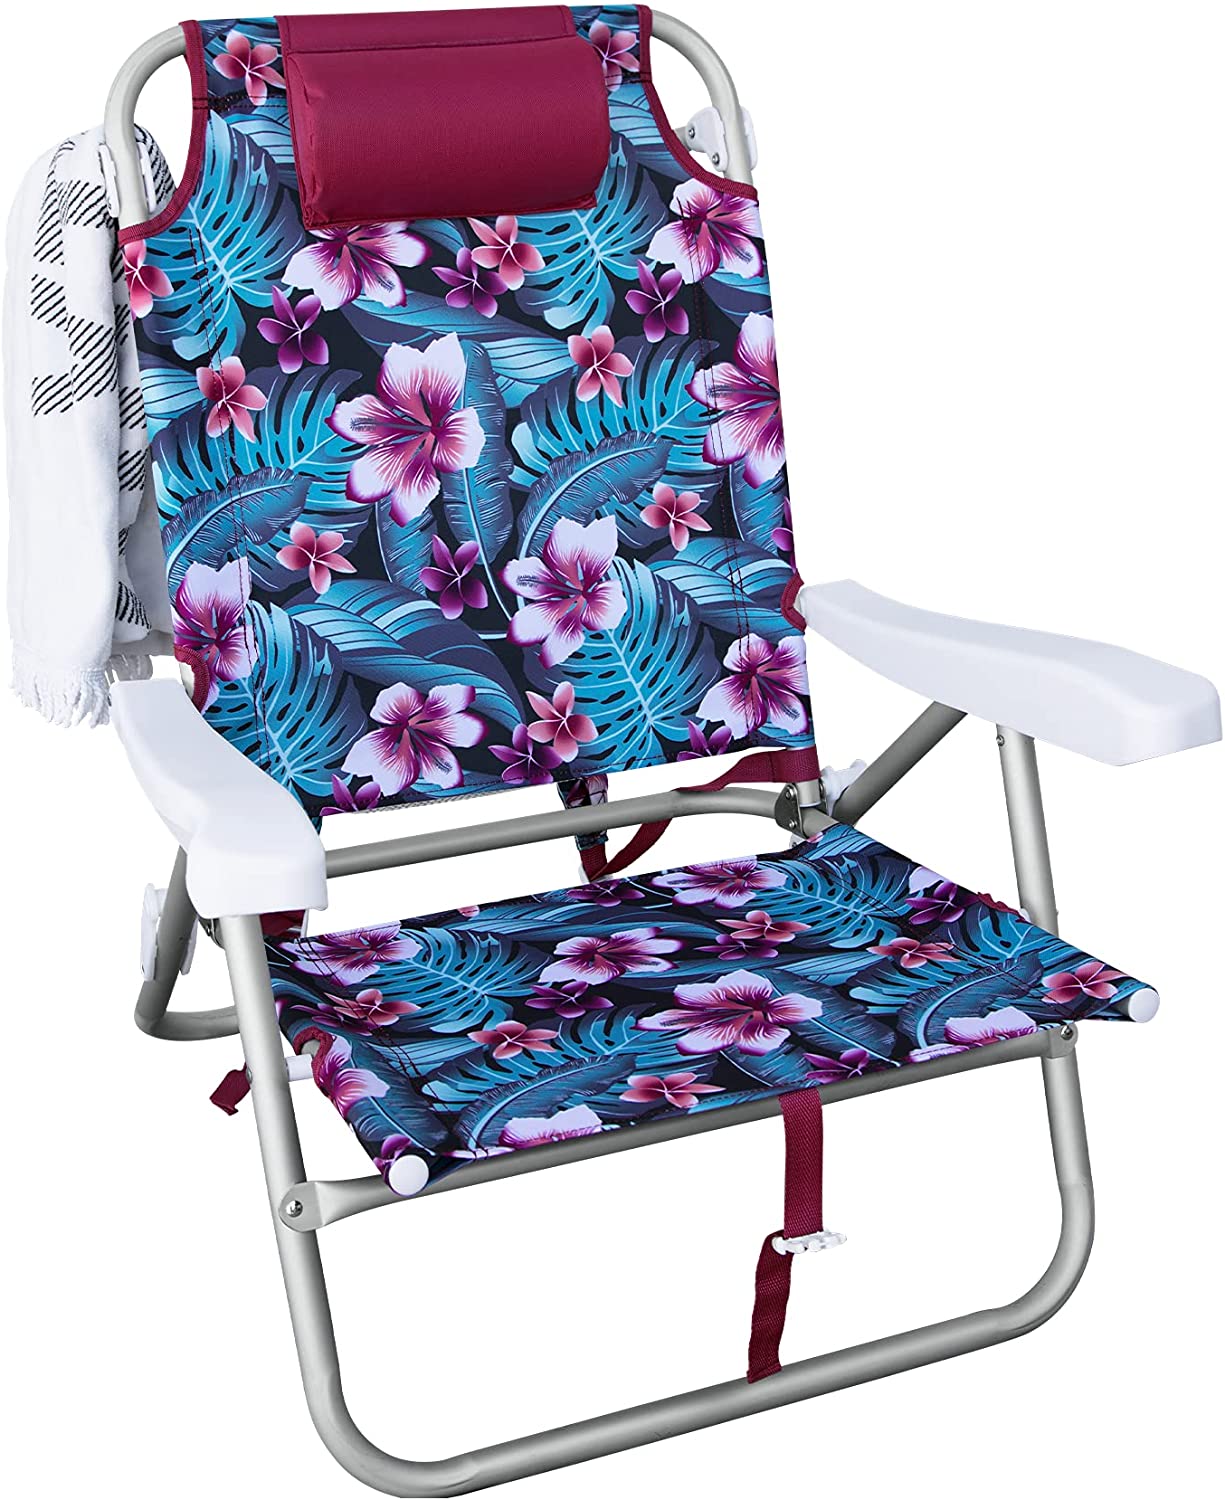 Hurley Backpack Beach Chair